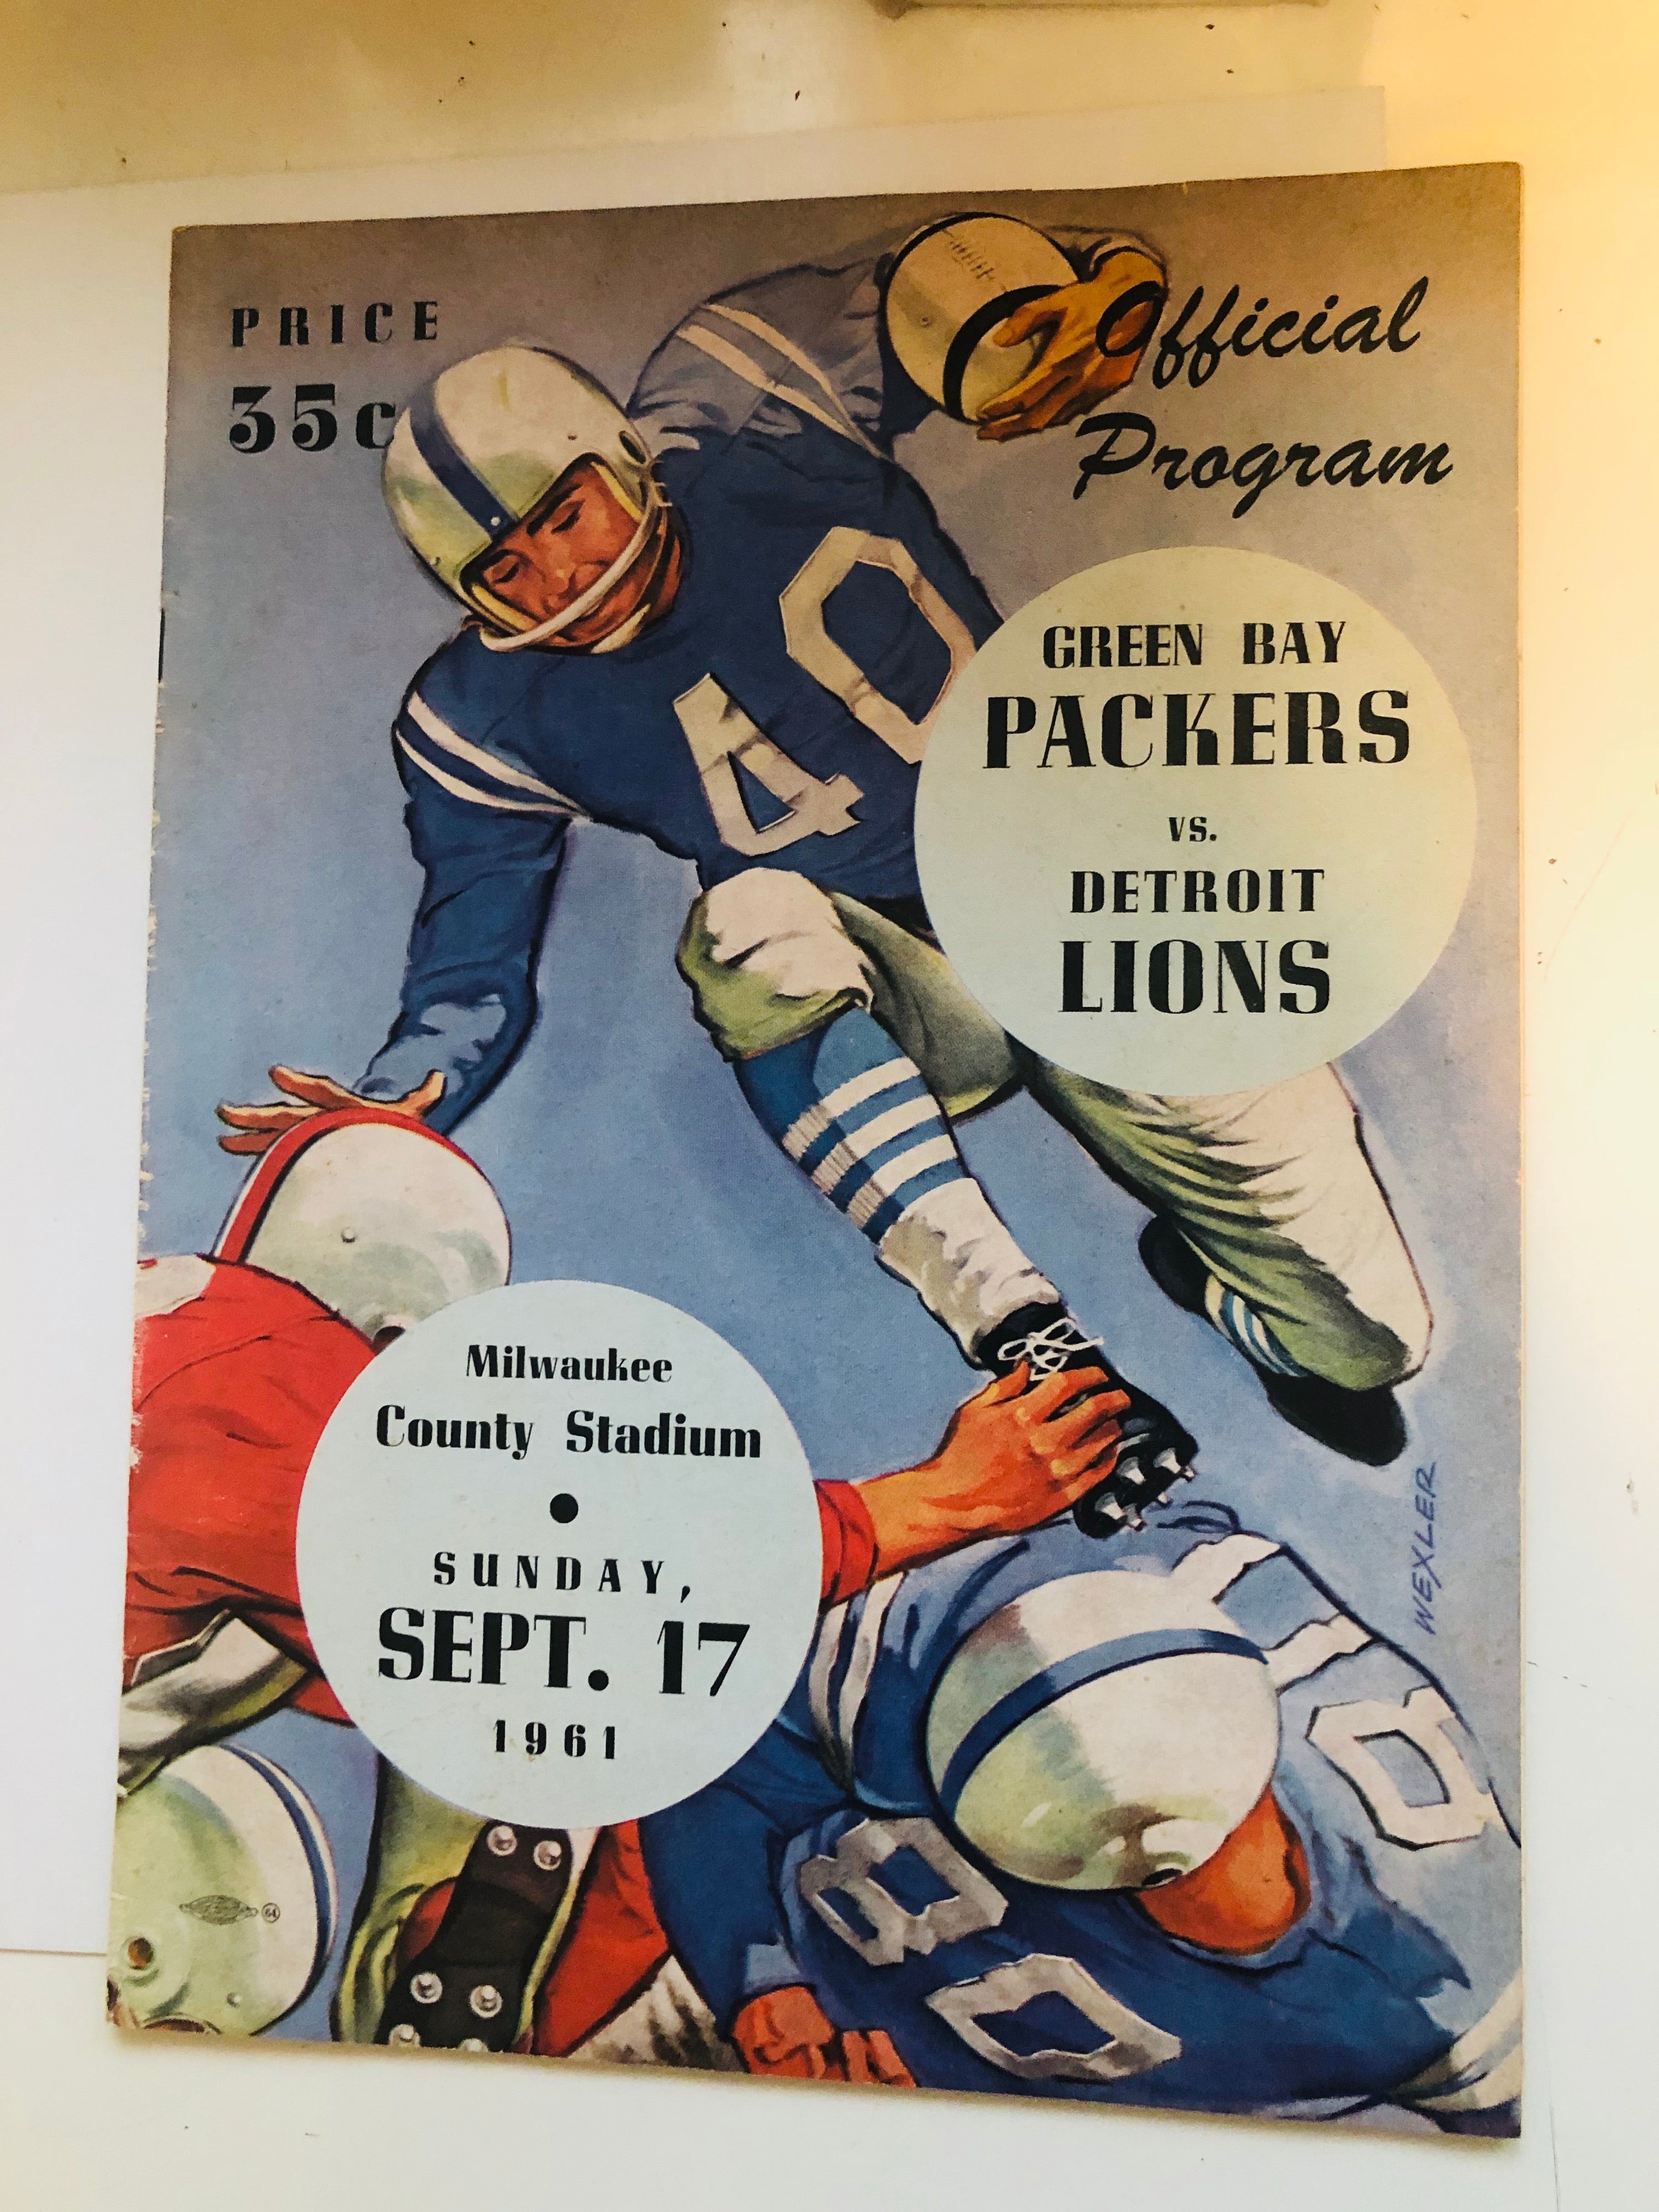 1961 NFL football game Packers vs Lions program